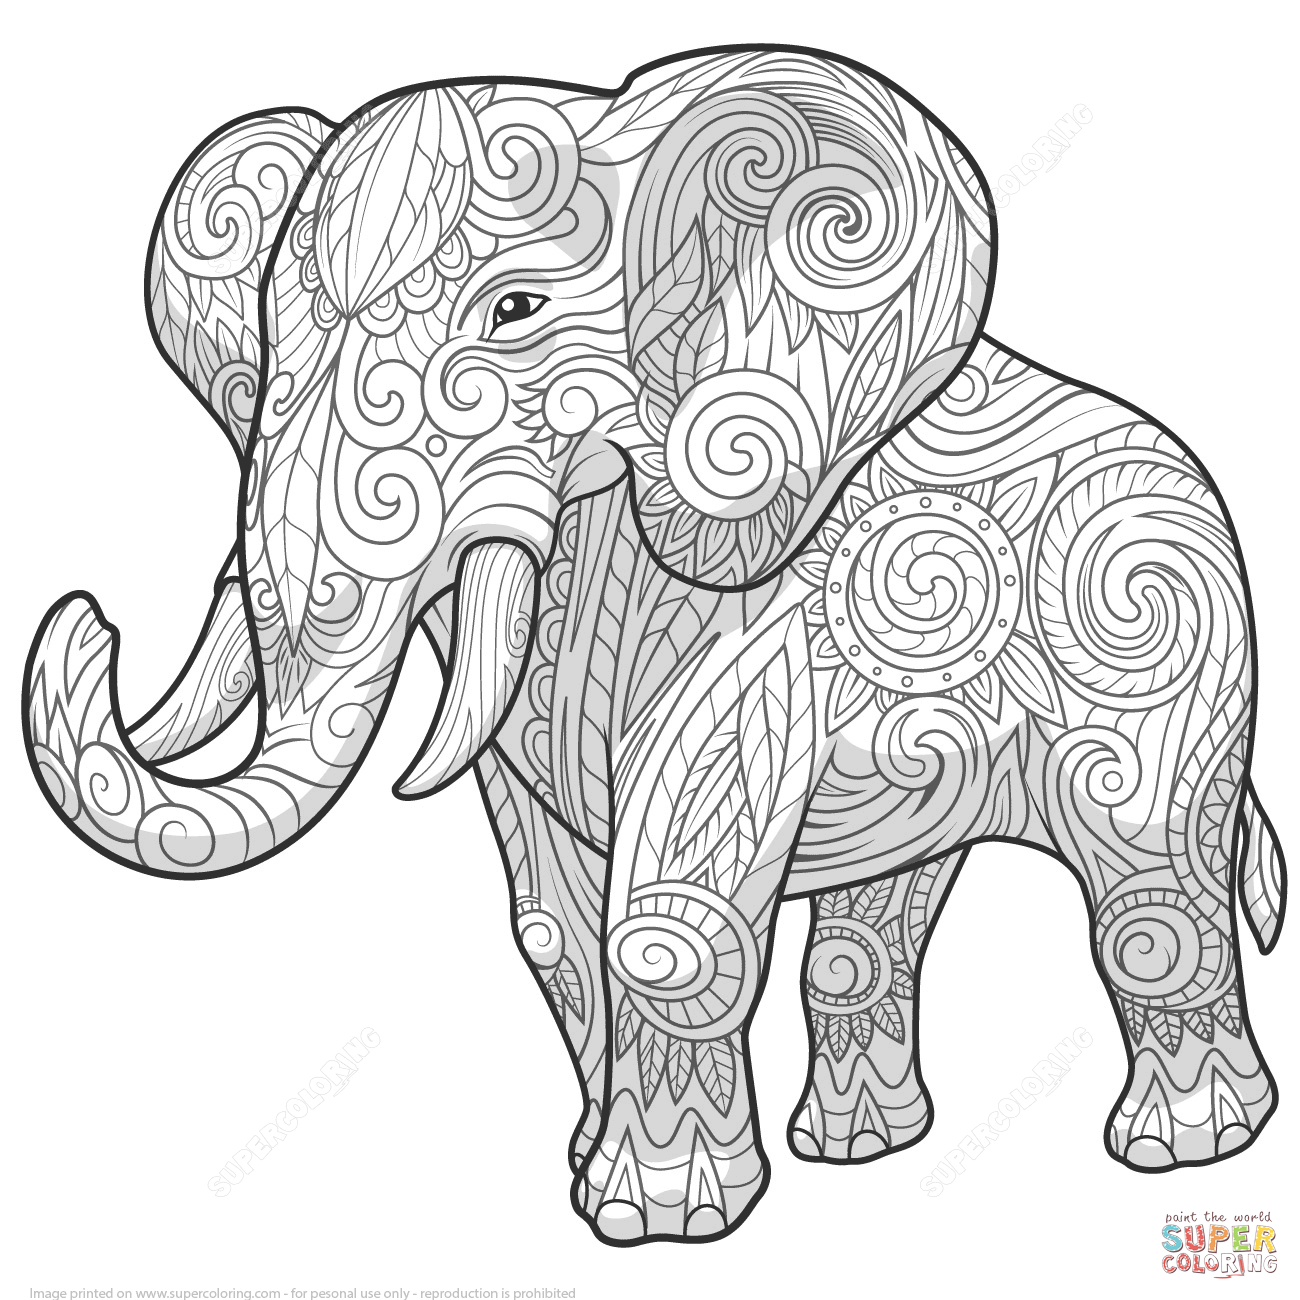 Elephant Zentangle.com. Free